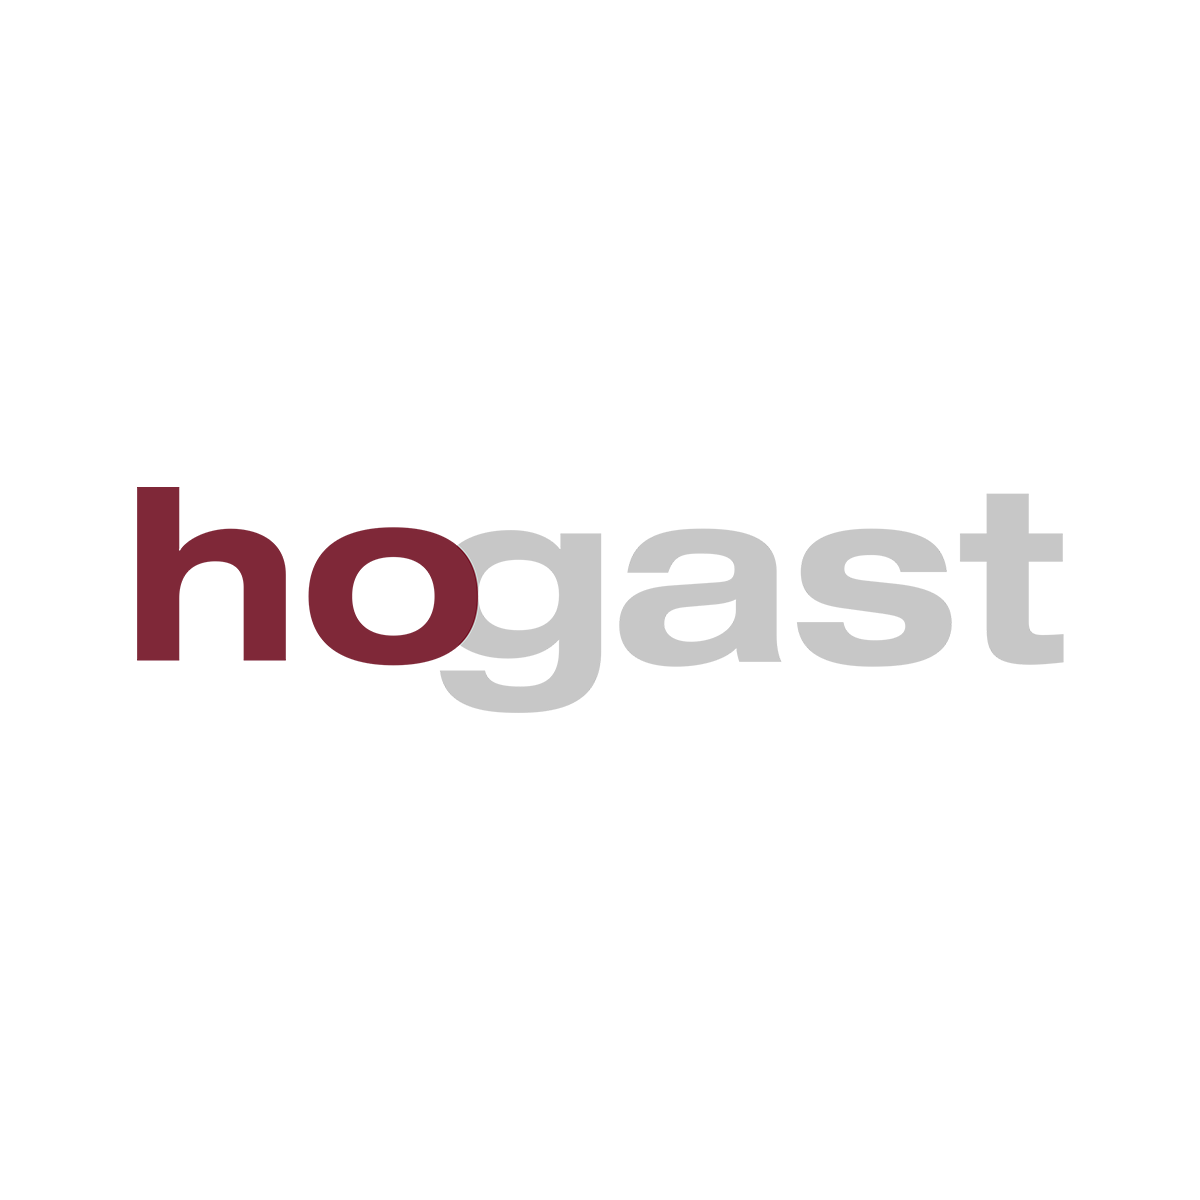 Hogast